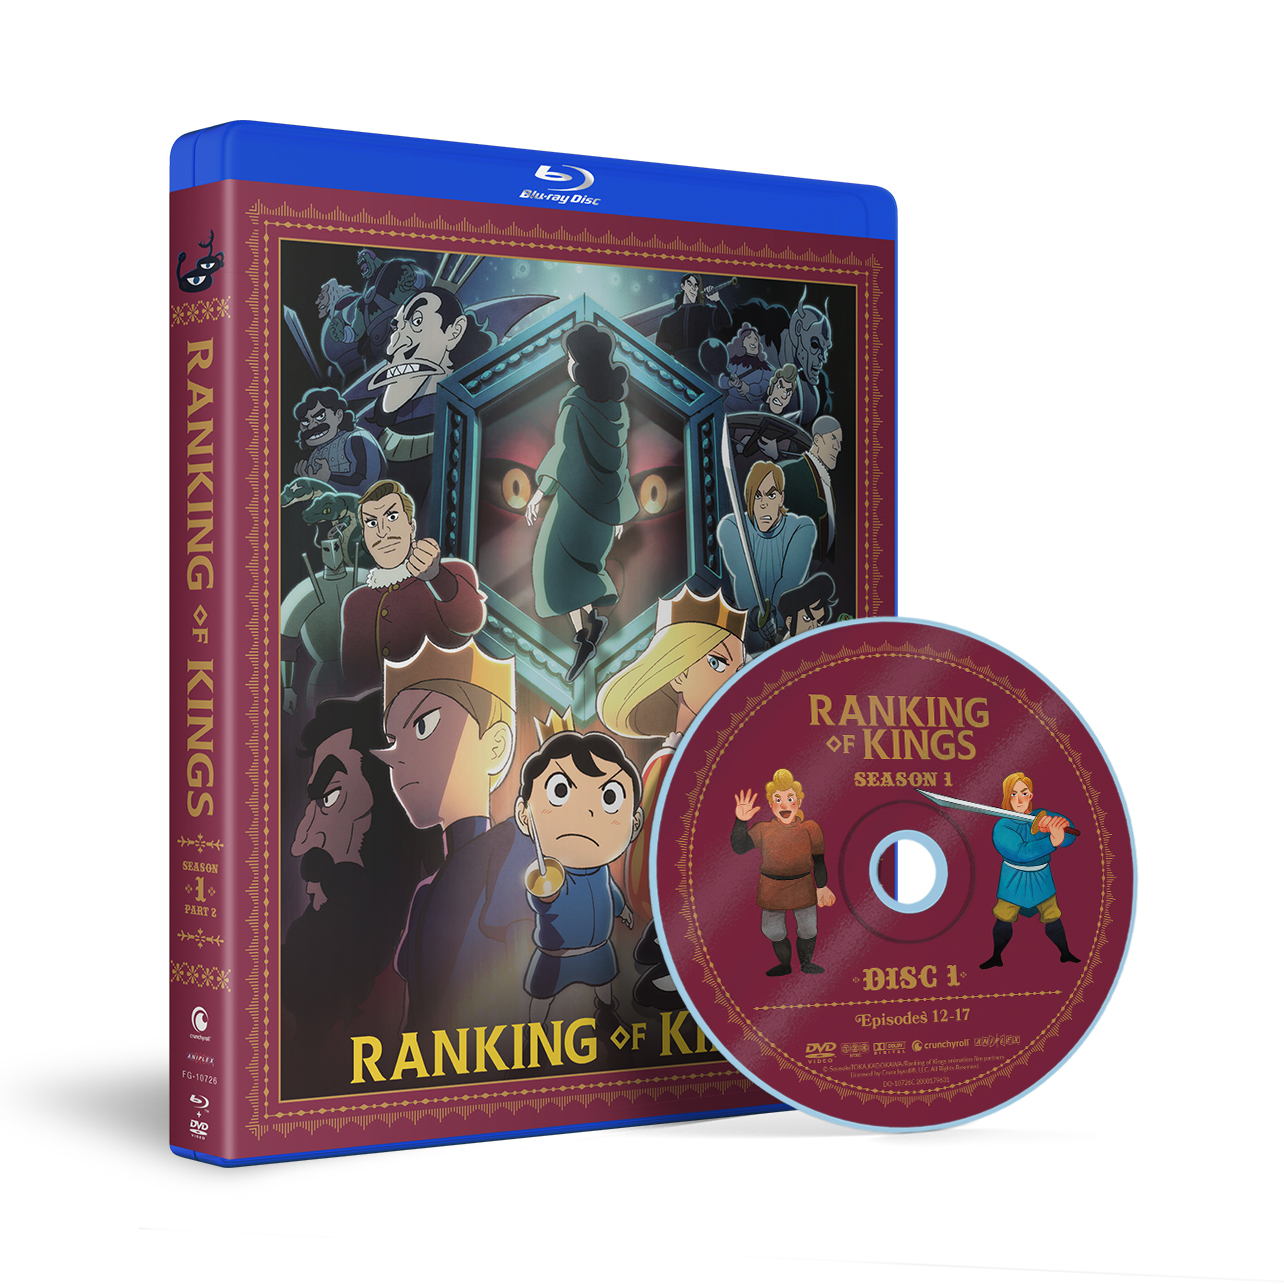 Ranking of Kings - Season 1 Part 2 - Blu-ray + DVD image count 1